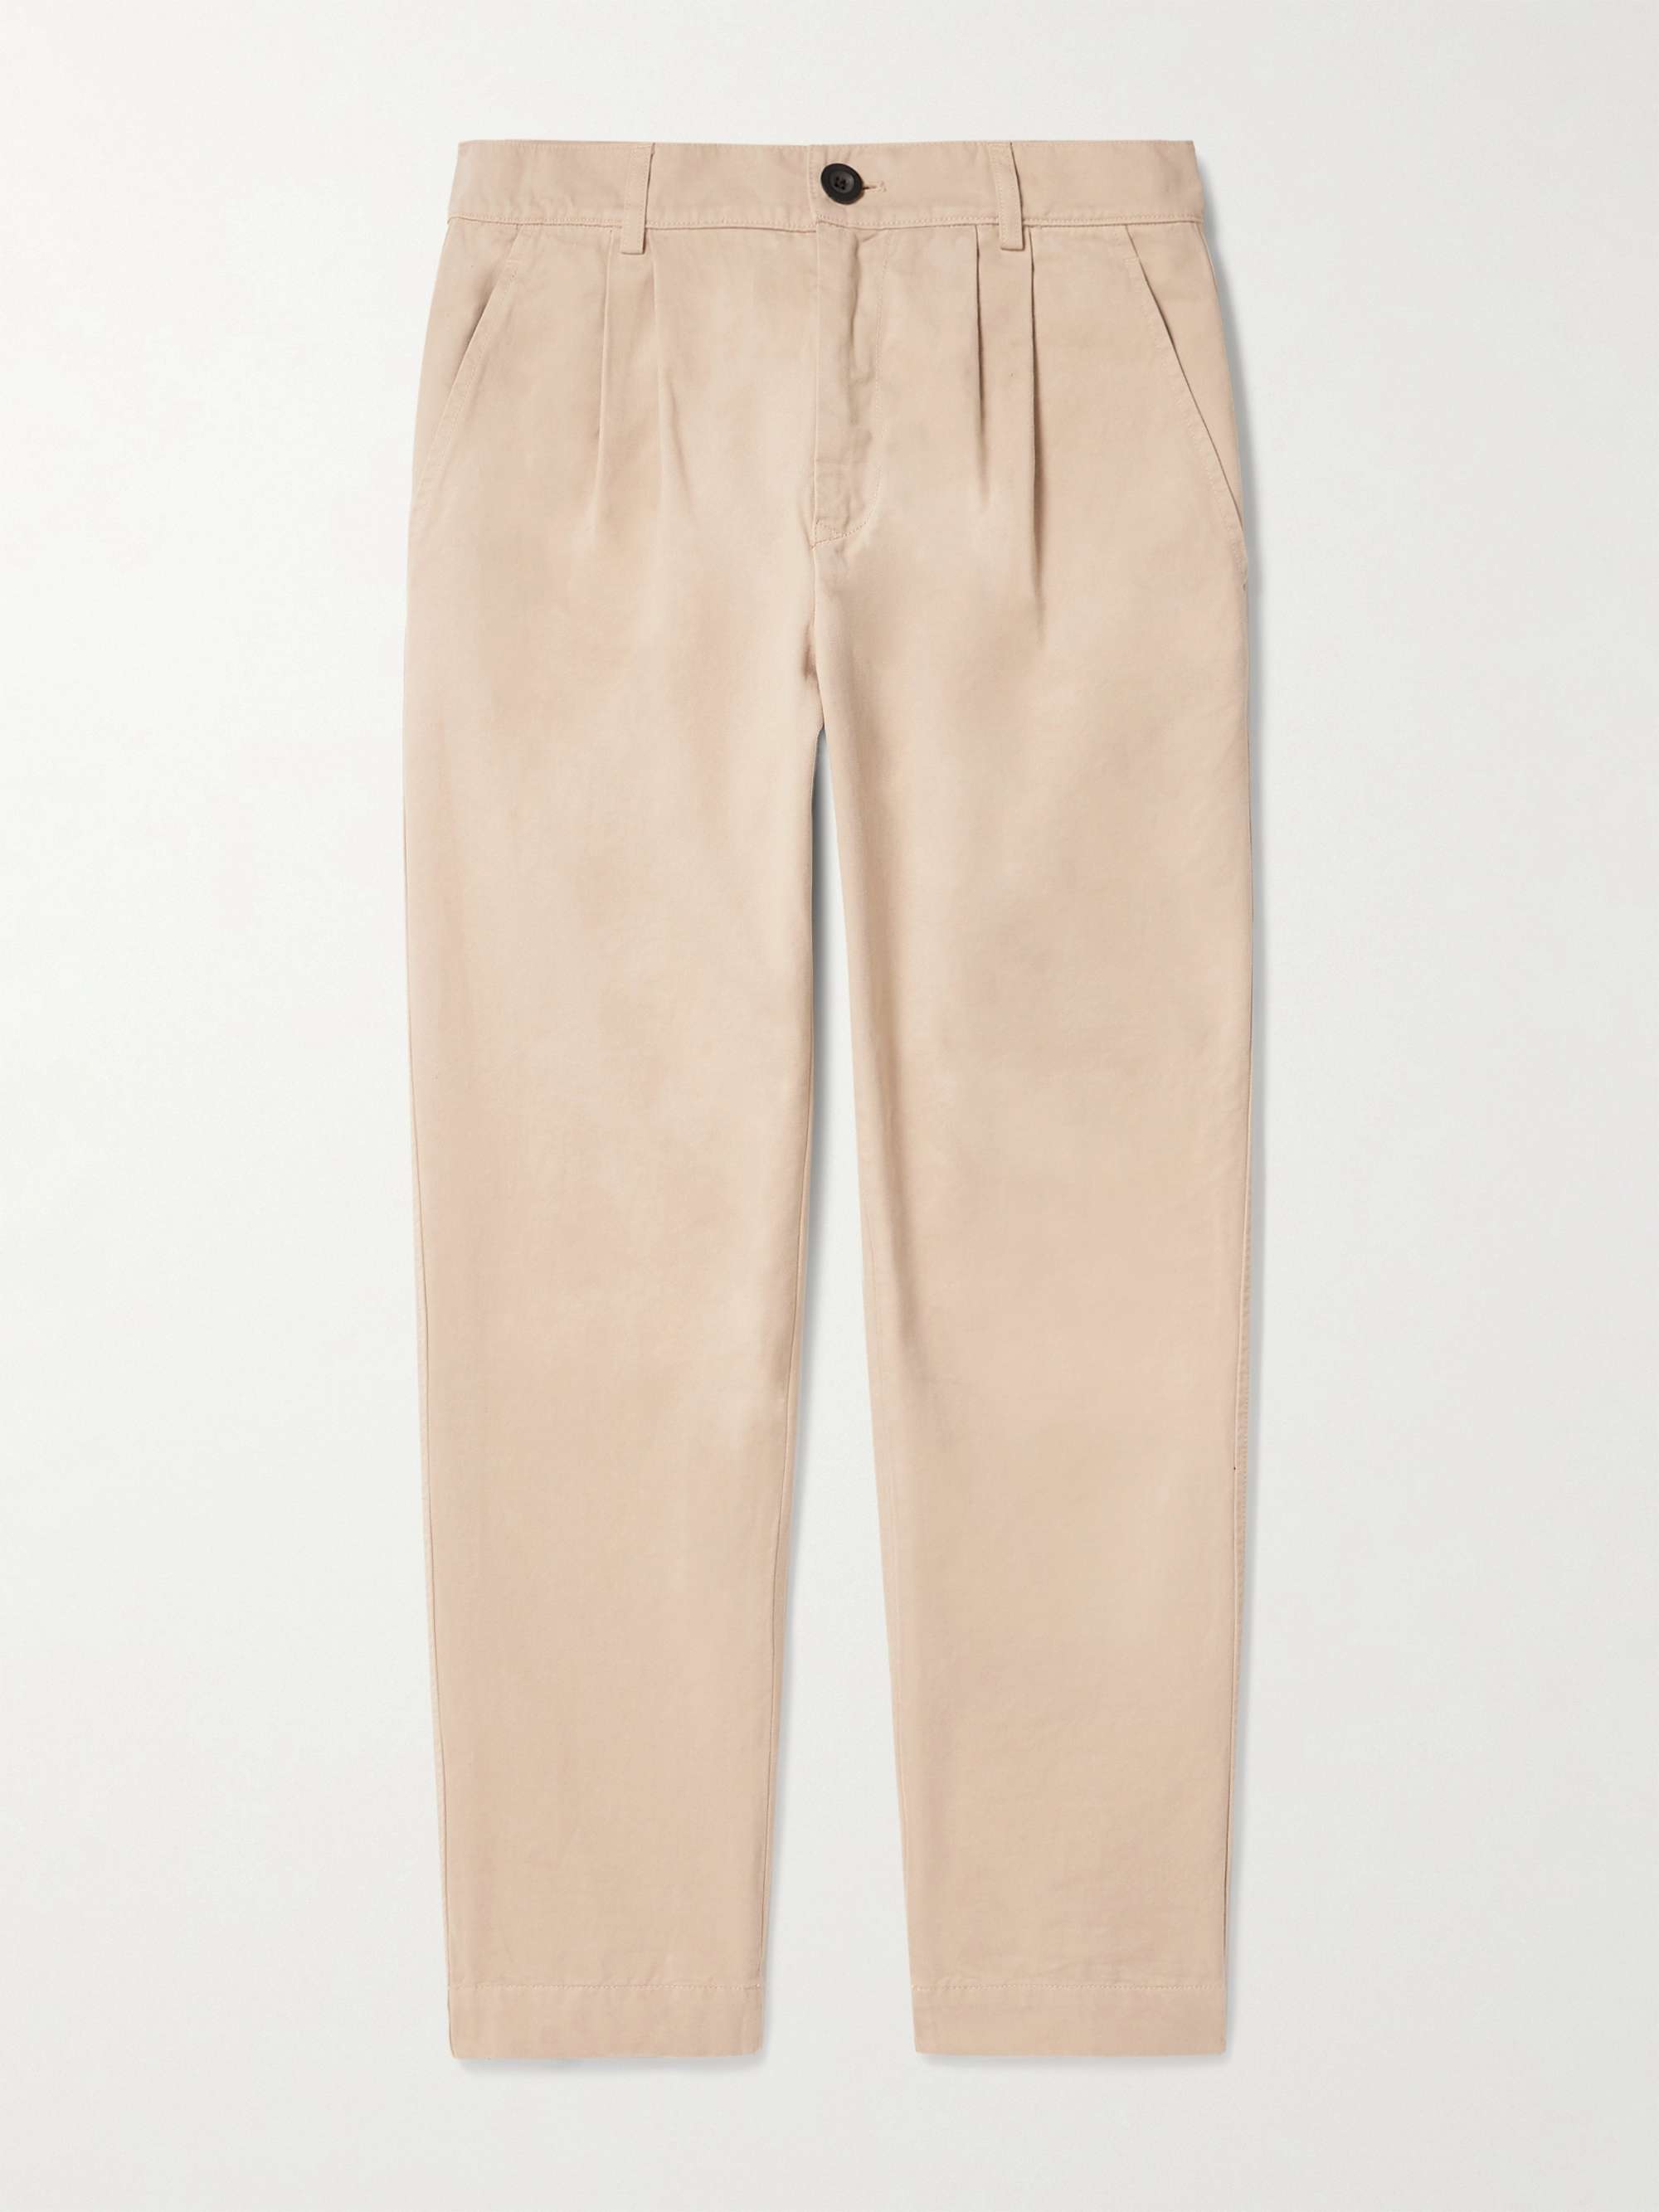 Rare Rabbit Men's Trews-1 Khaki Solid Mid-Rise Regular Fit Trouser